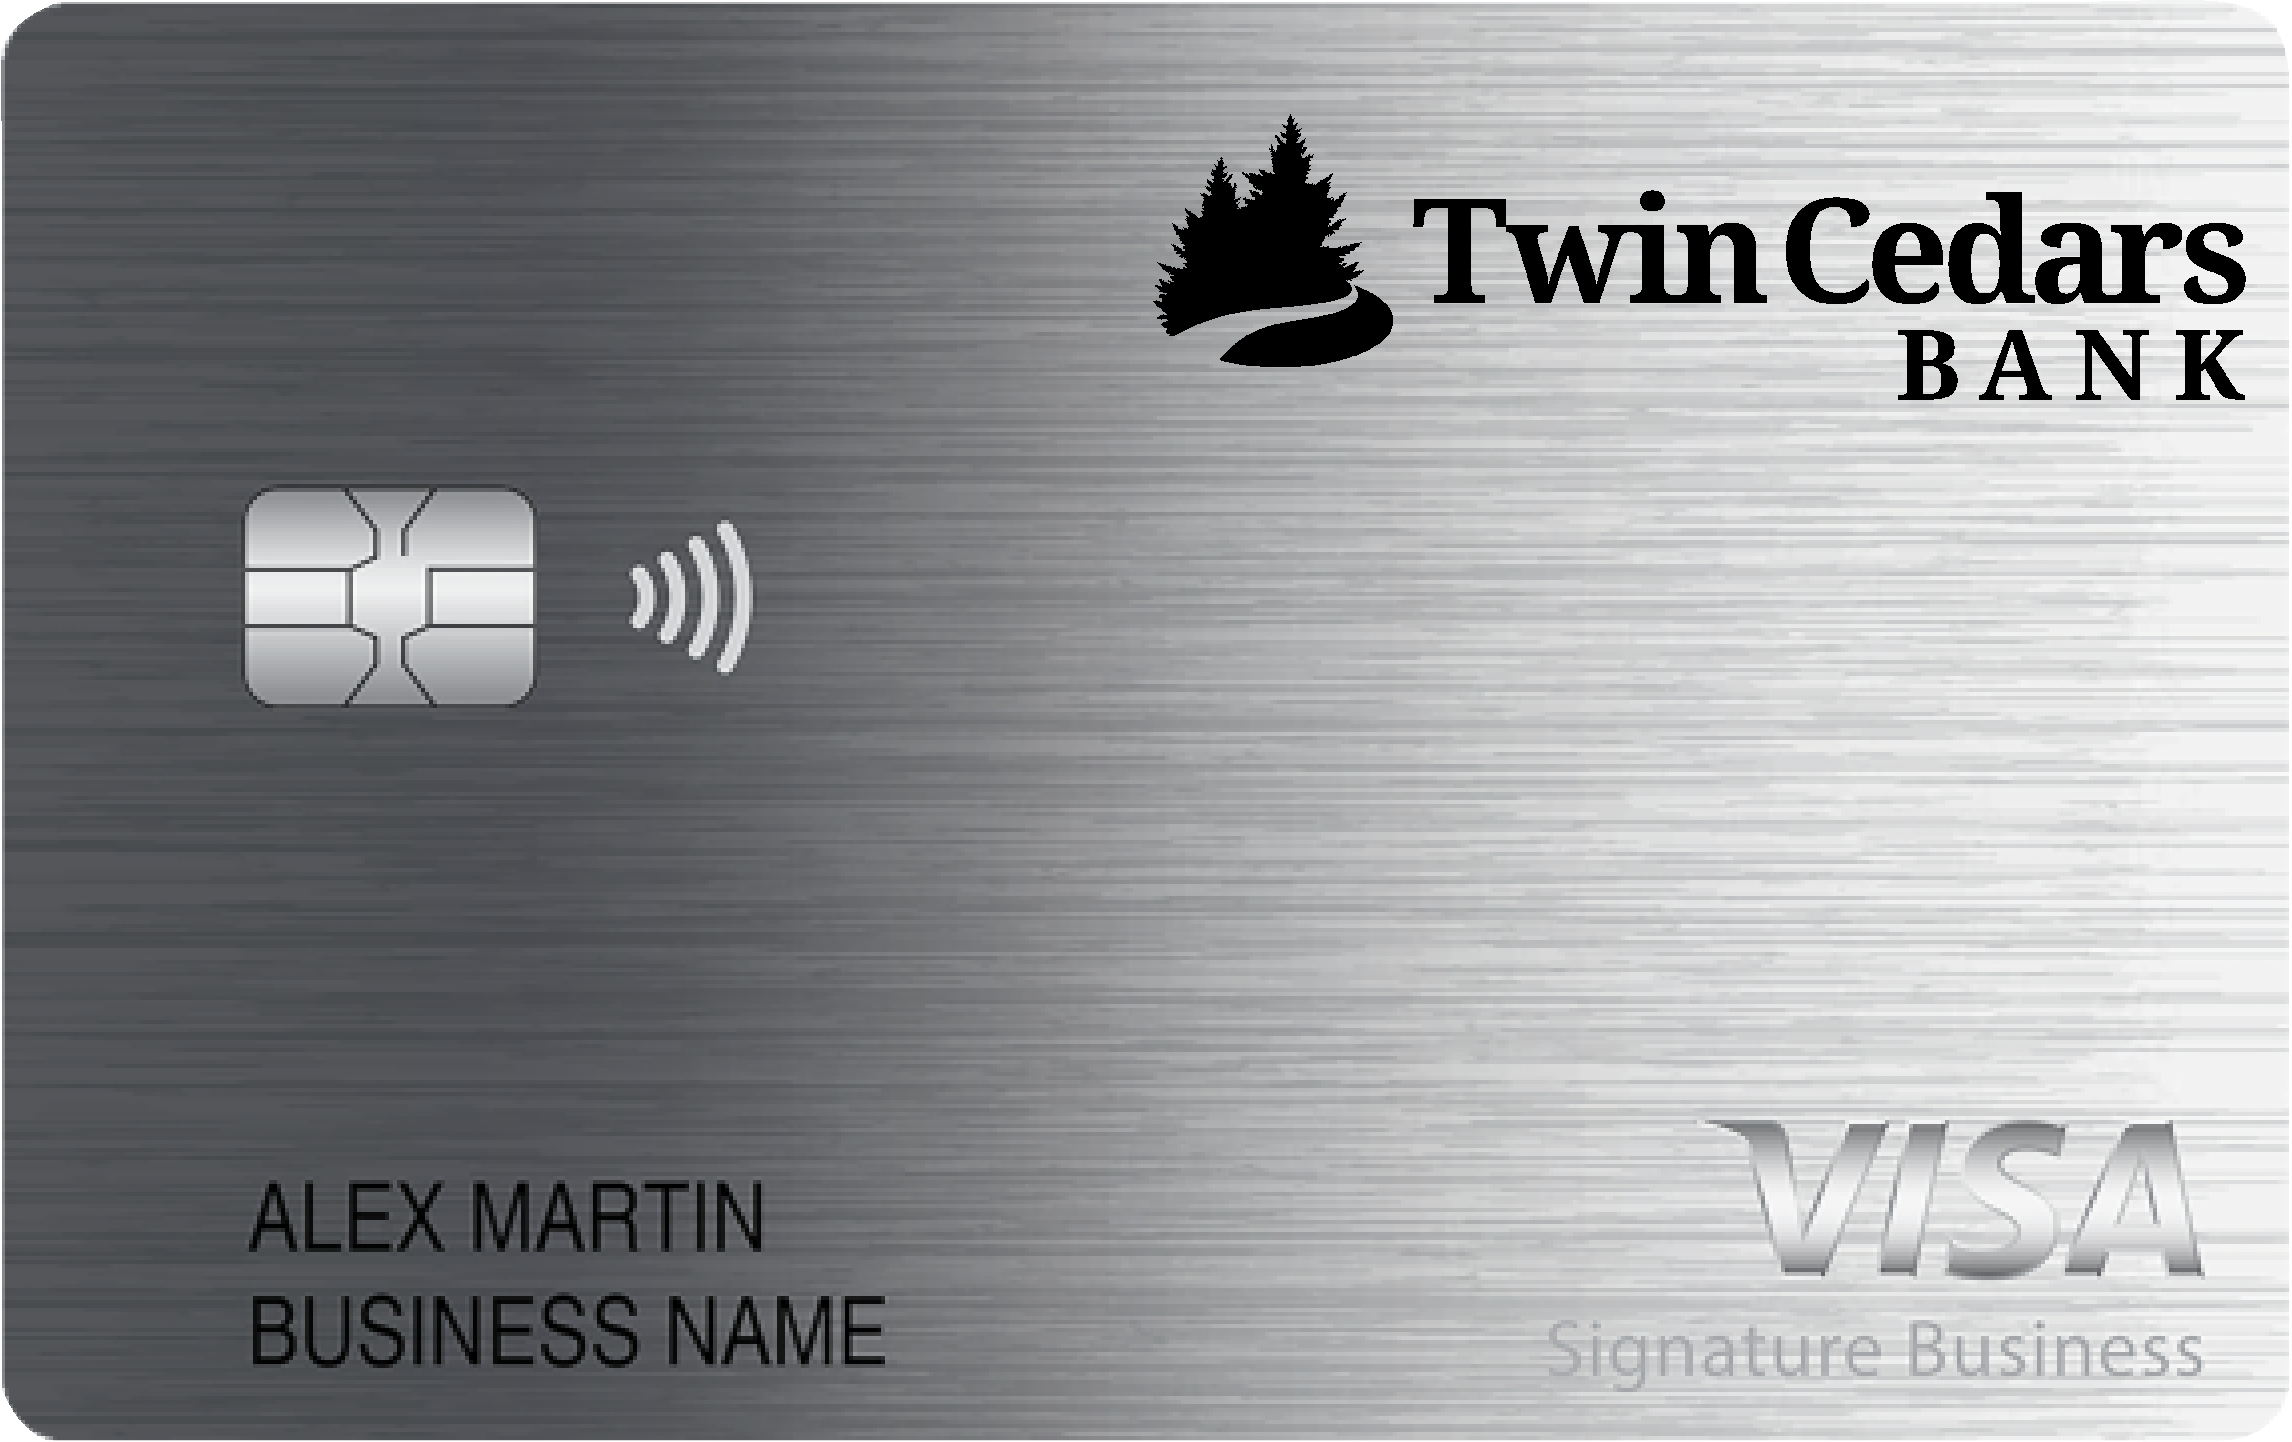 Twin Cedars Bank Smart Business Rewards Card